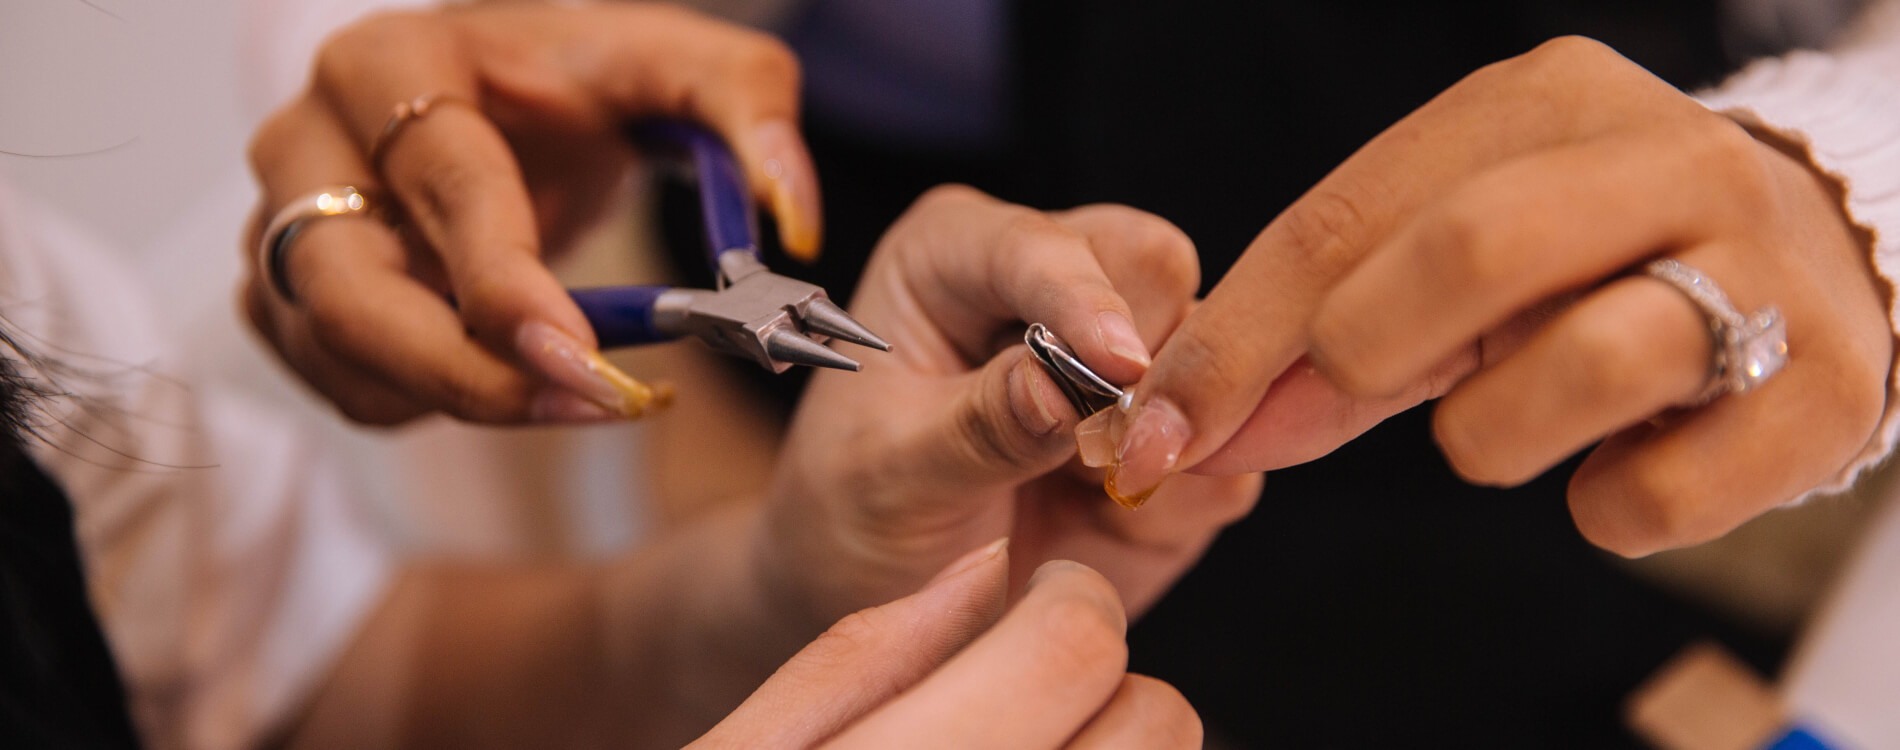 7 Best Jewellery Making Kits to Help You Sparkle | ClassBento